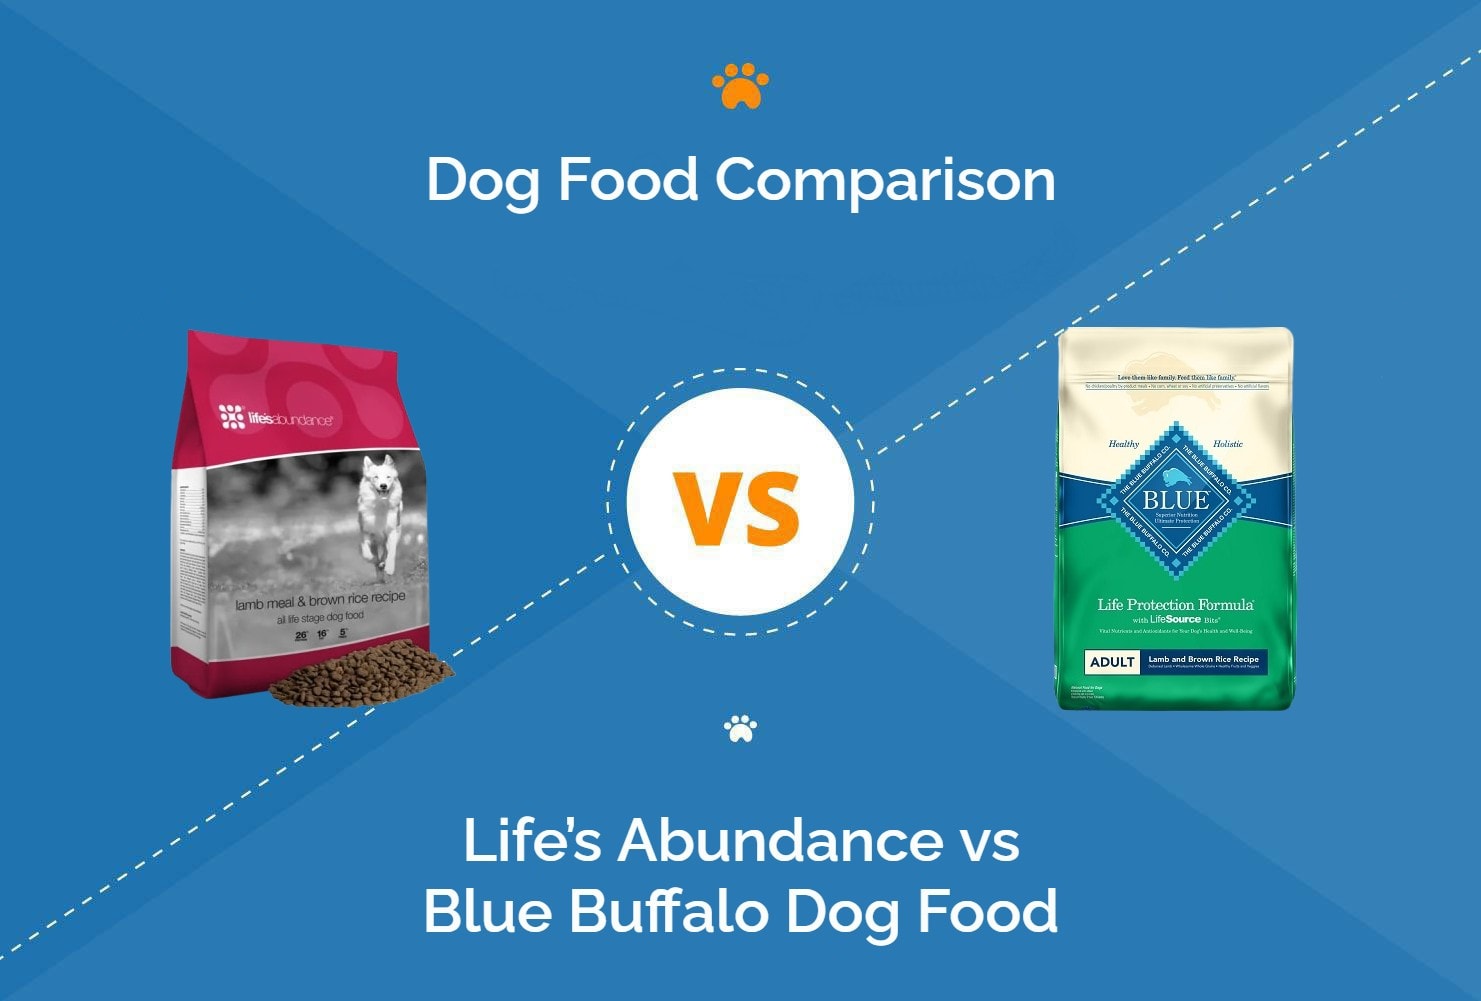 Life’s Abundance vs. Blue Buffalo Dog Food